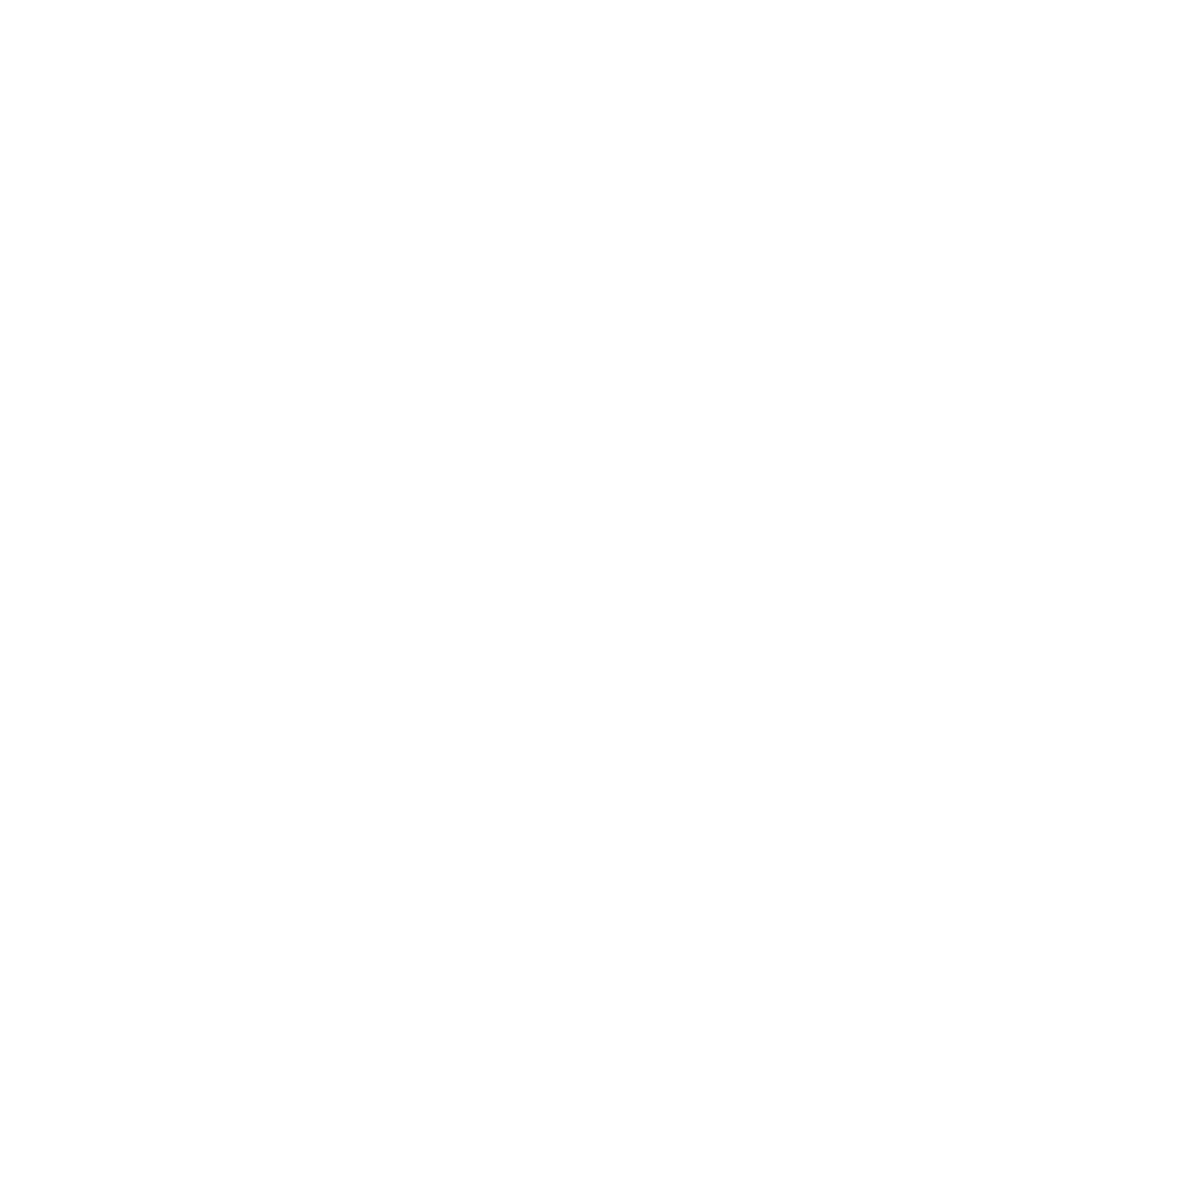 Make The Cut Haircuts — Since 2005